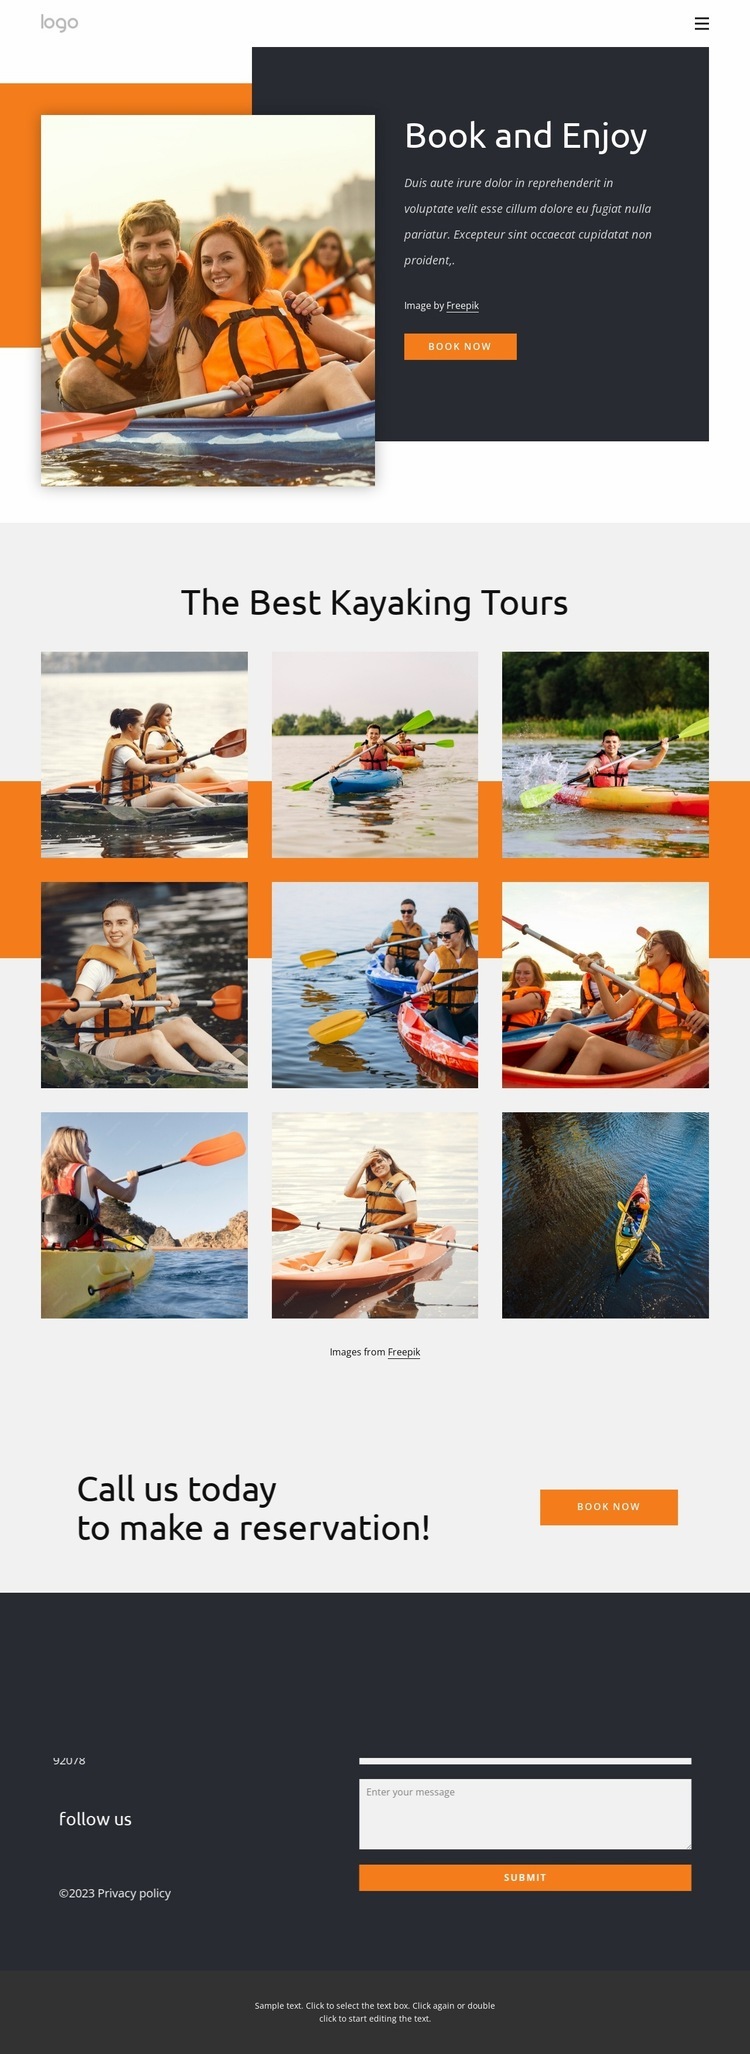 Kayaking tours and holidays Web Page Design